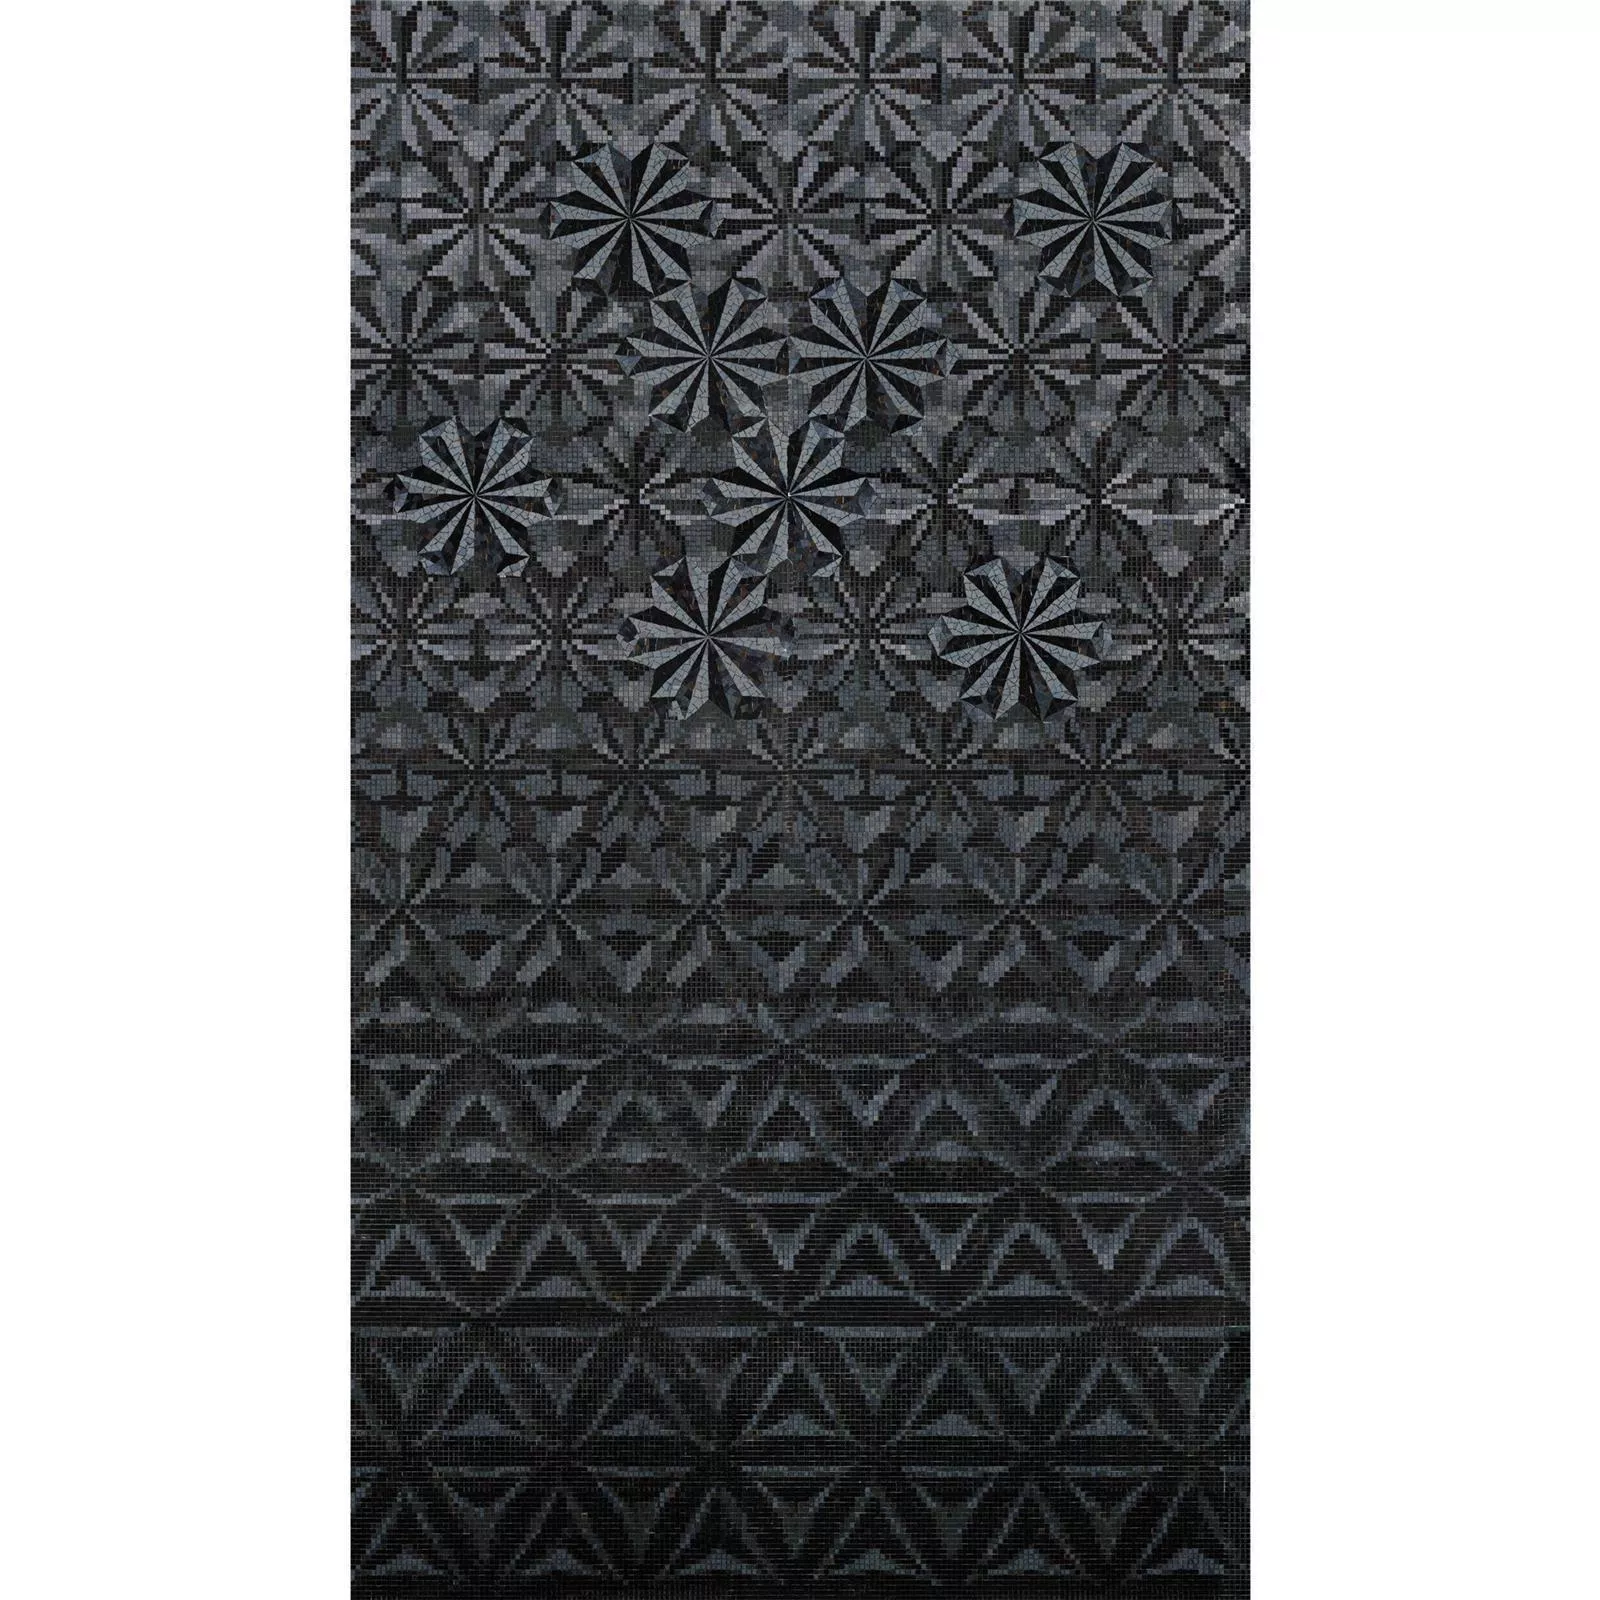 Glass Mosaic Picture Magicflower Black 130x240cm